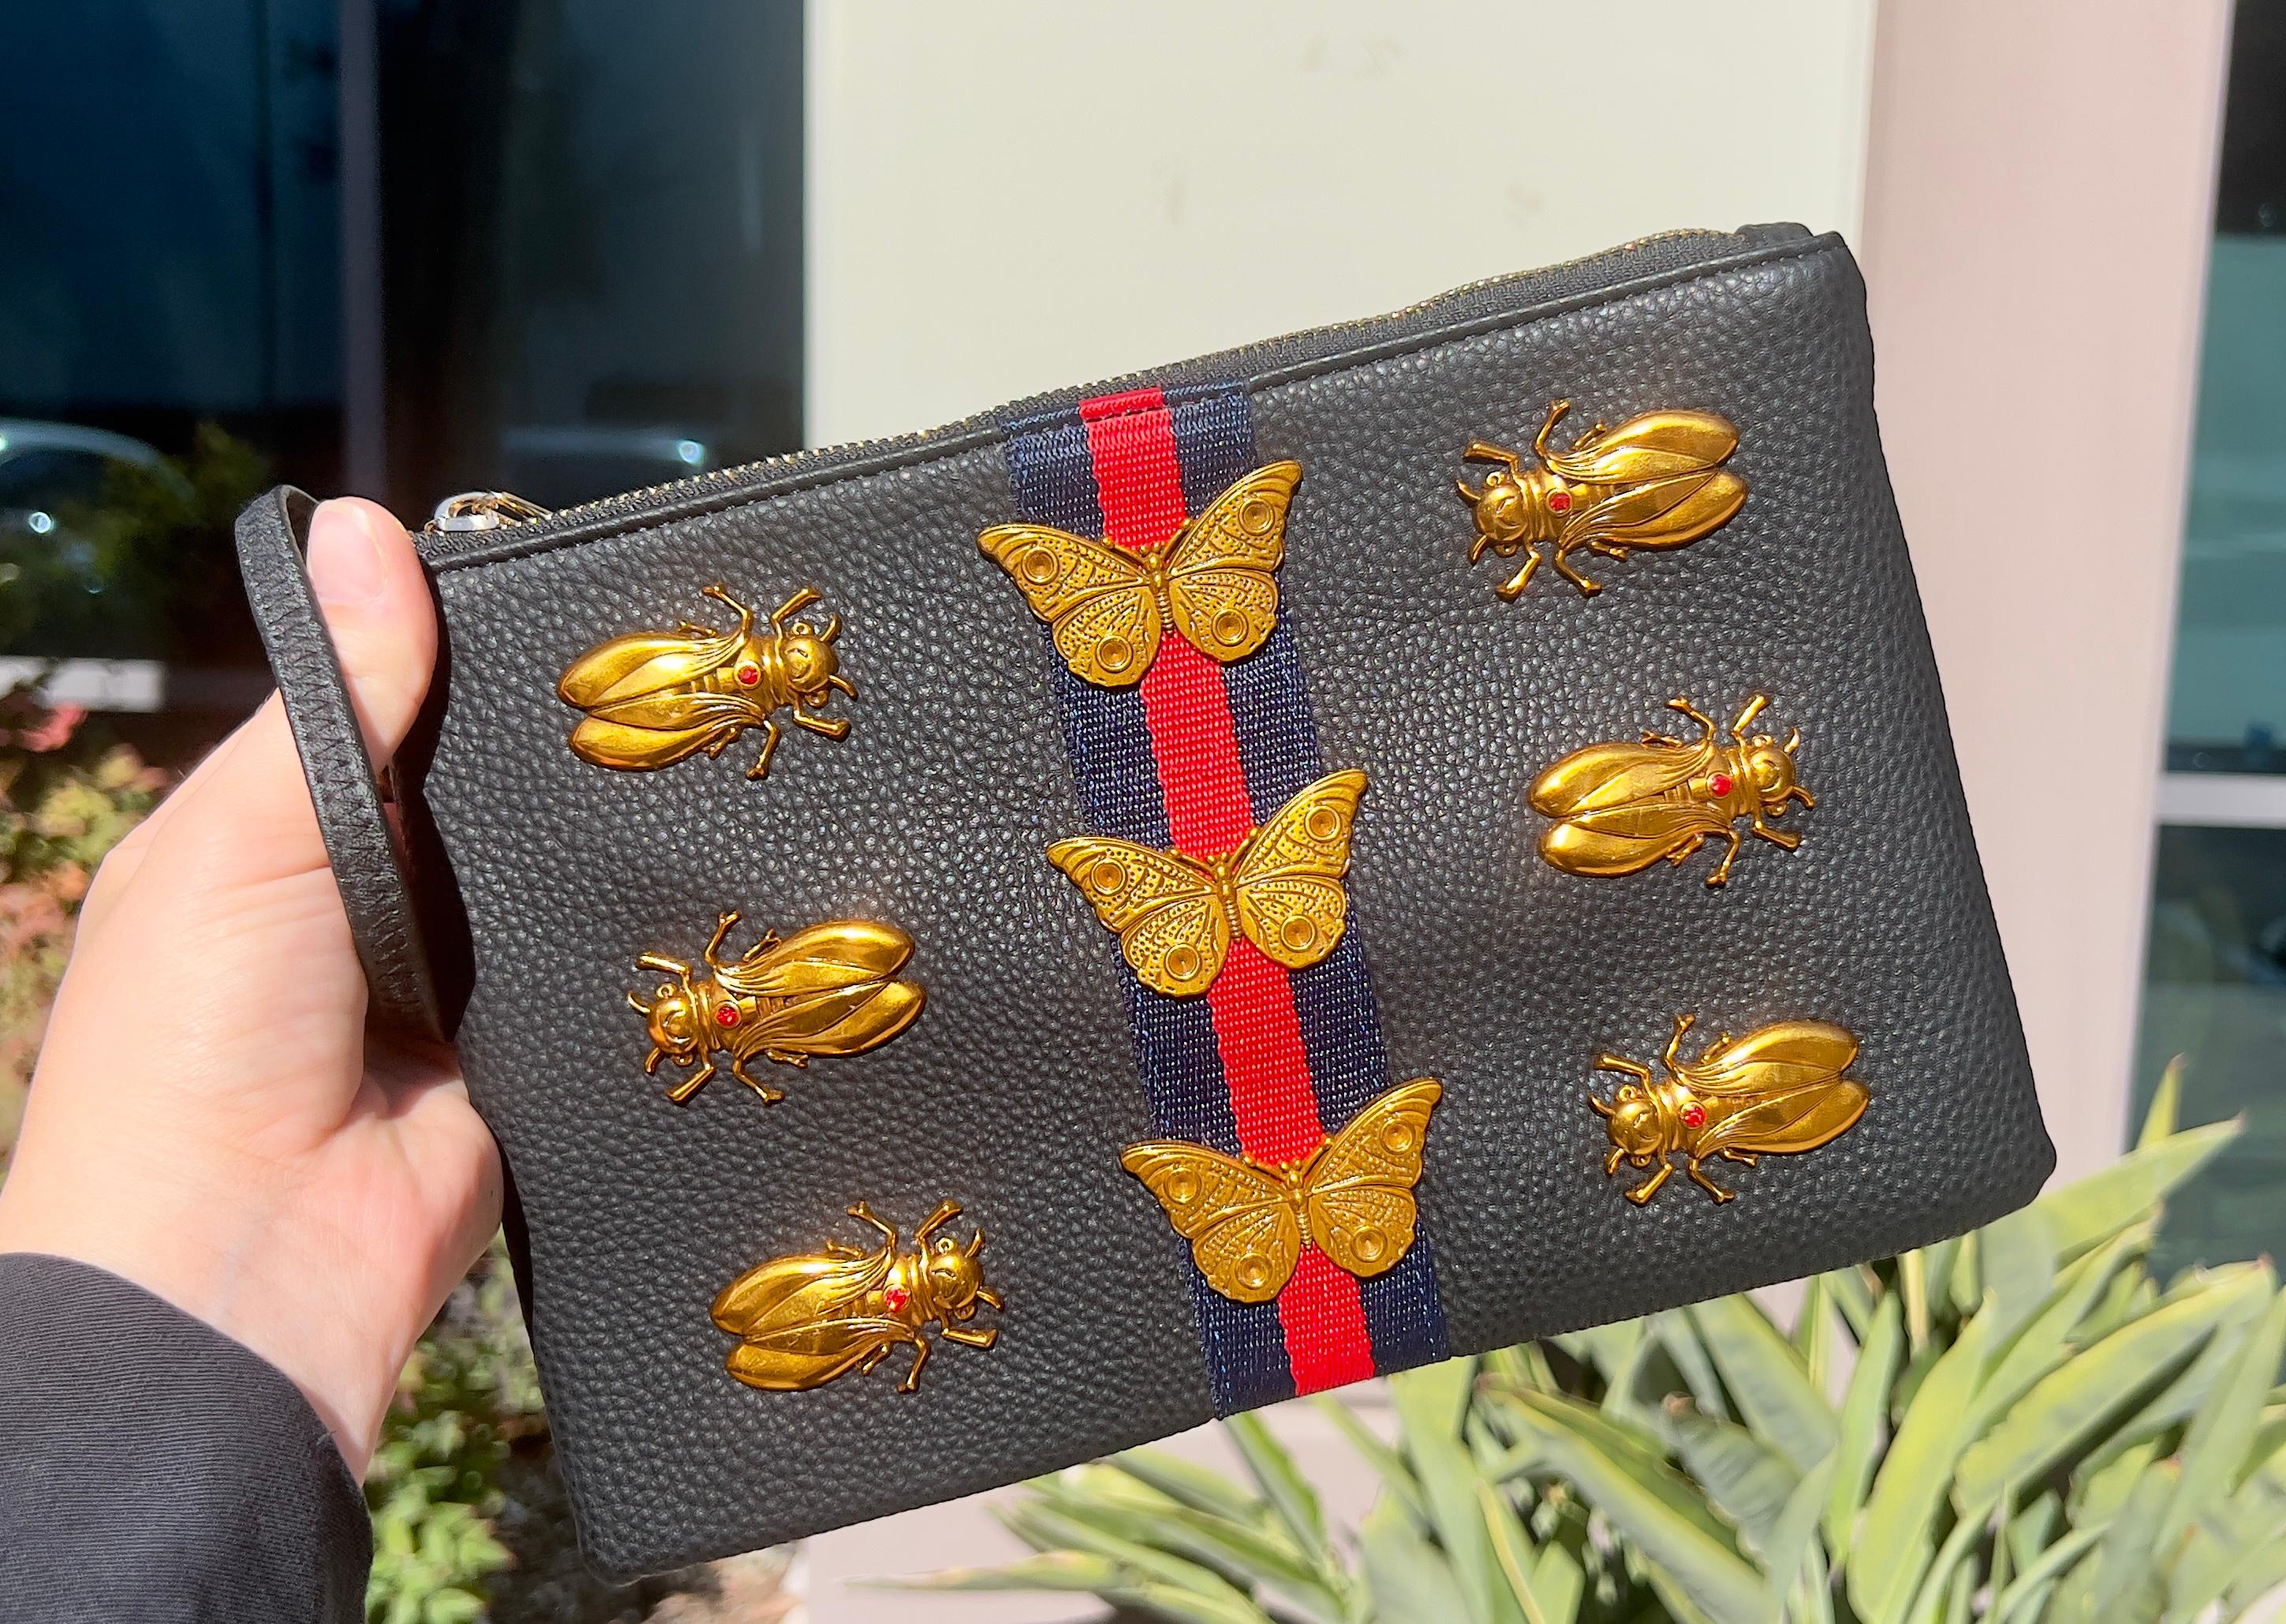 Ivy Wristlet Black Handbag In Excellent Condition For Sale In Carlsbad, CA